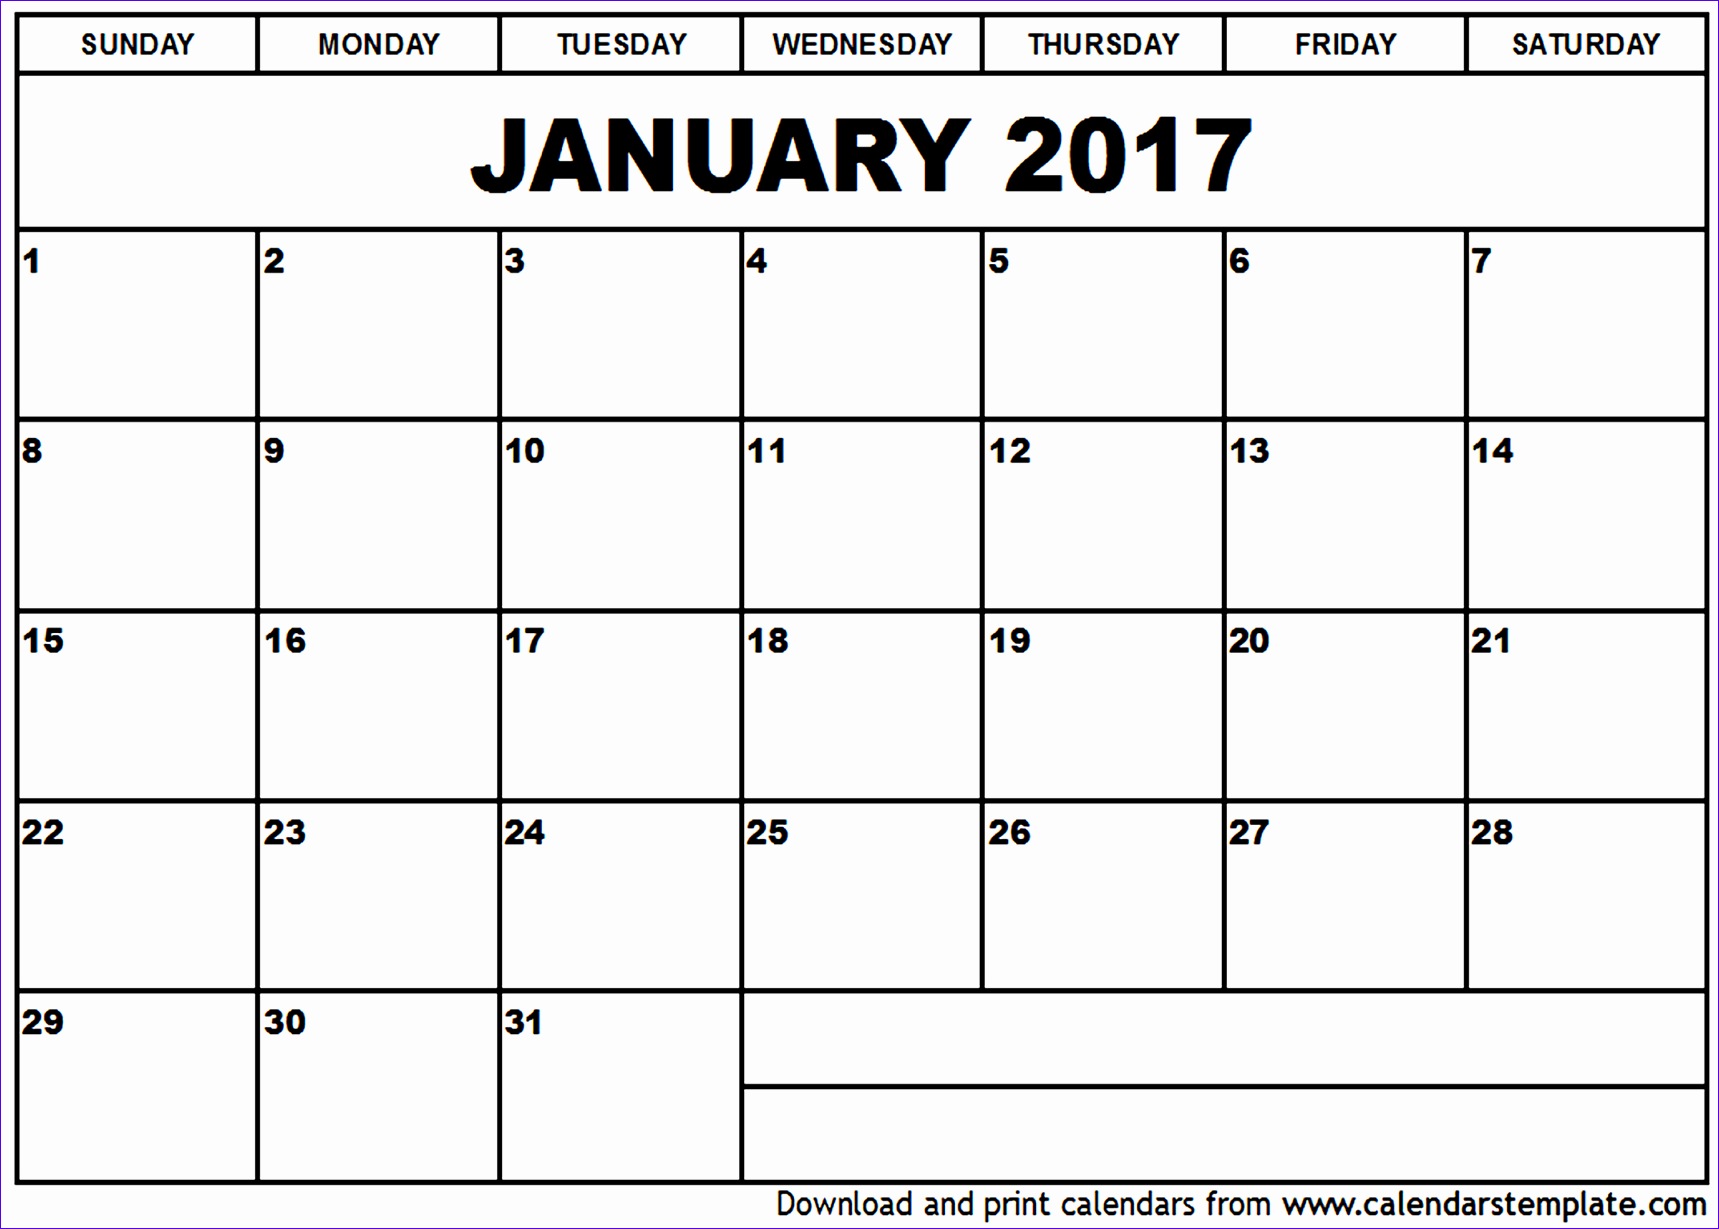 january 2017 calendar 2124 17191229